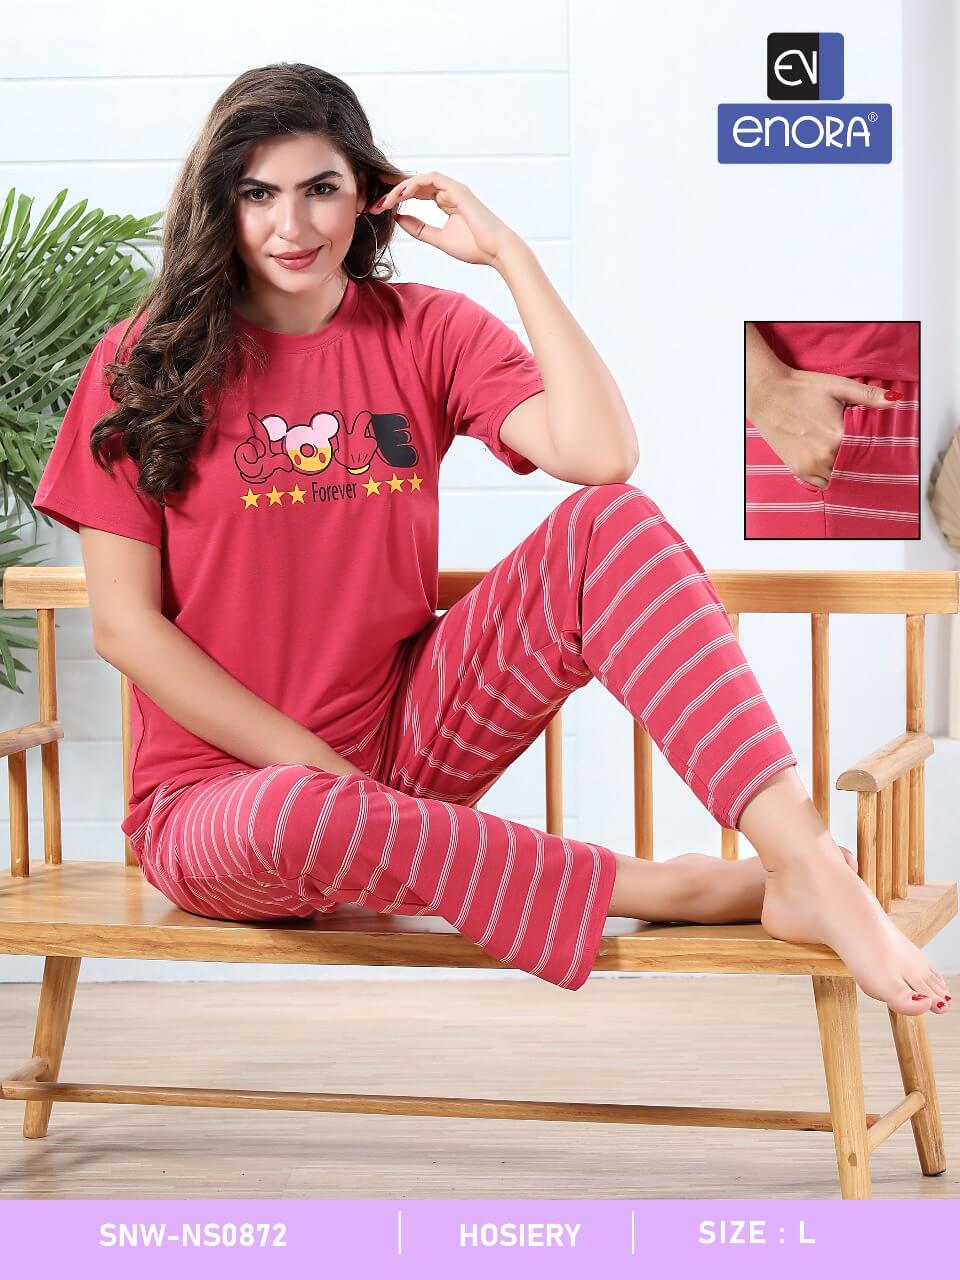 Enora Tshirt With Lining Payjama Night Dress Catalog collection 4